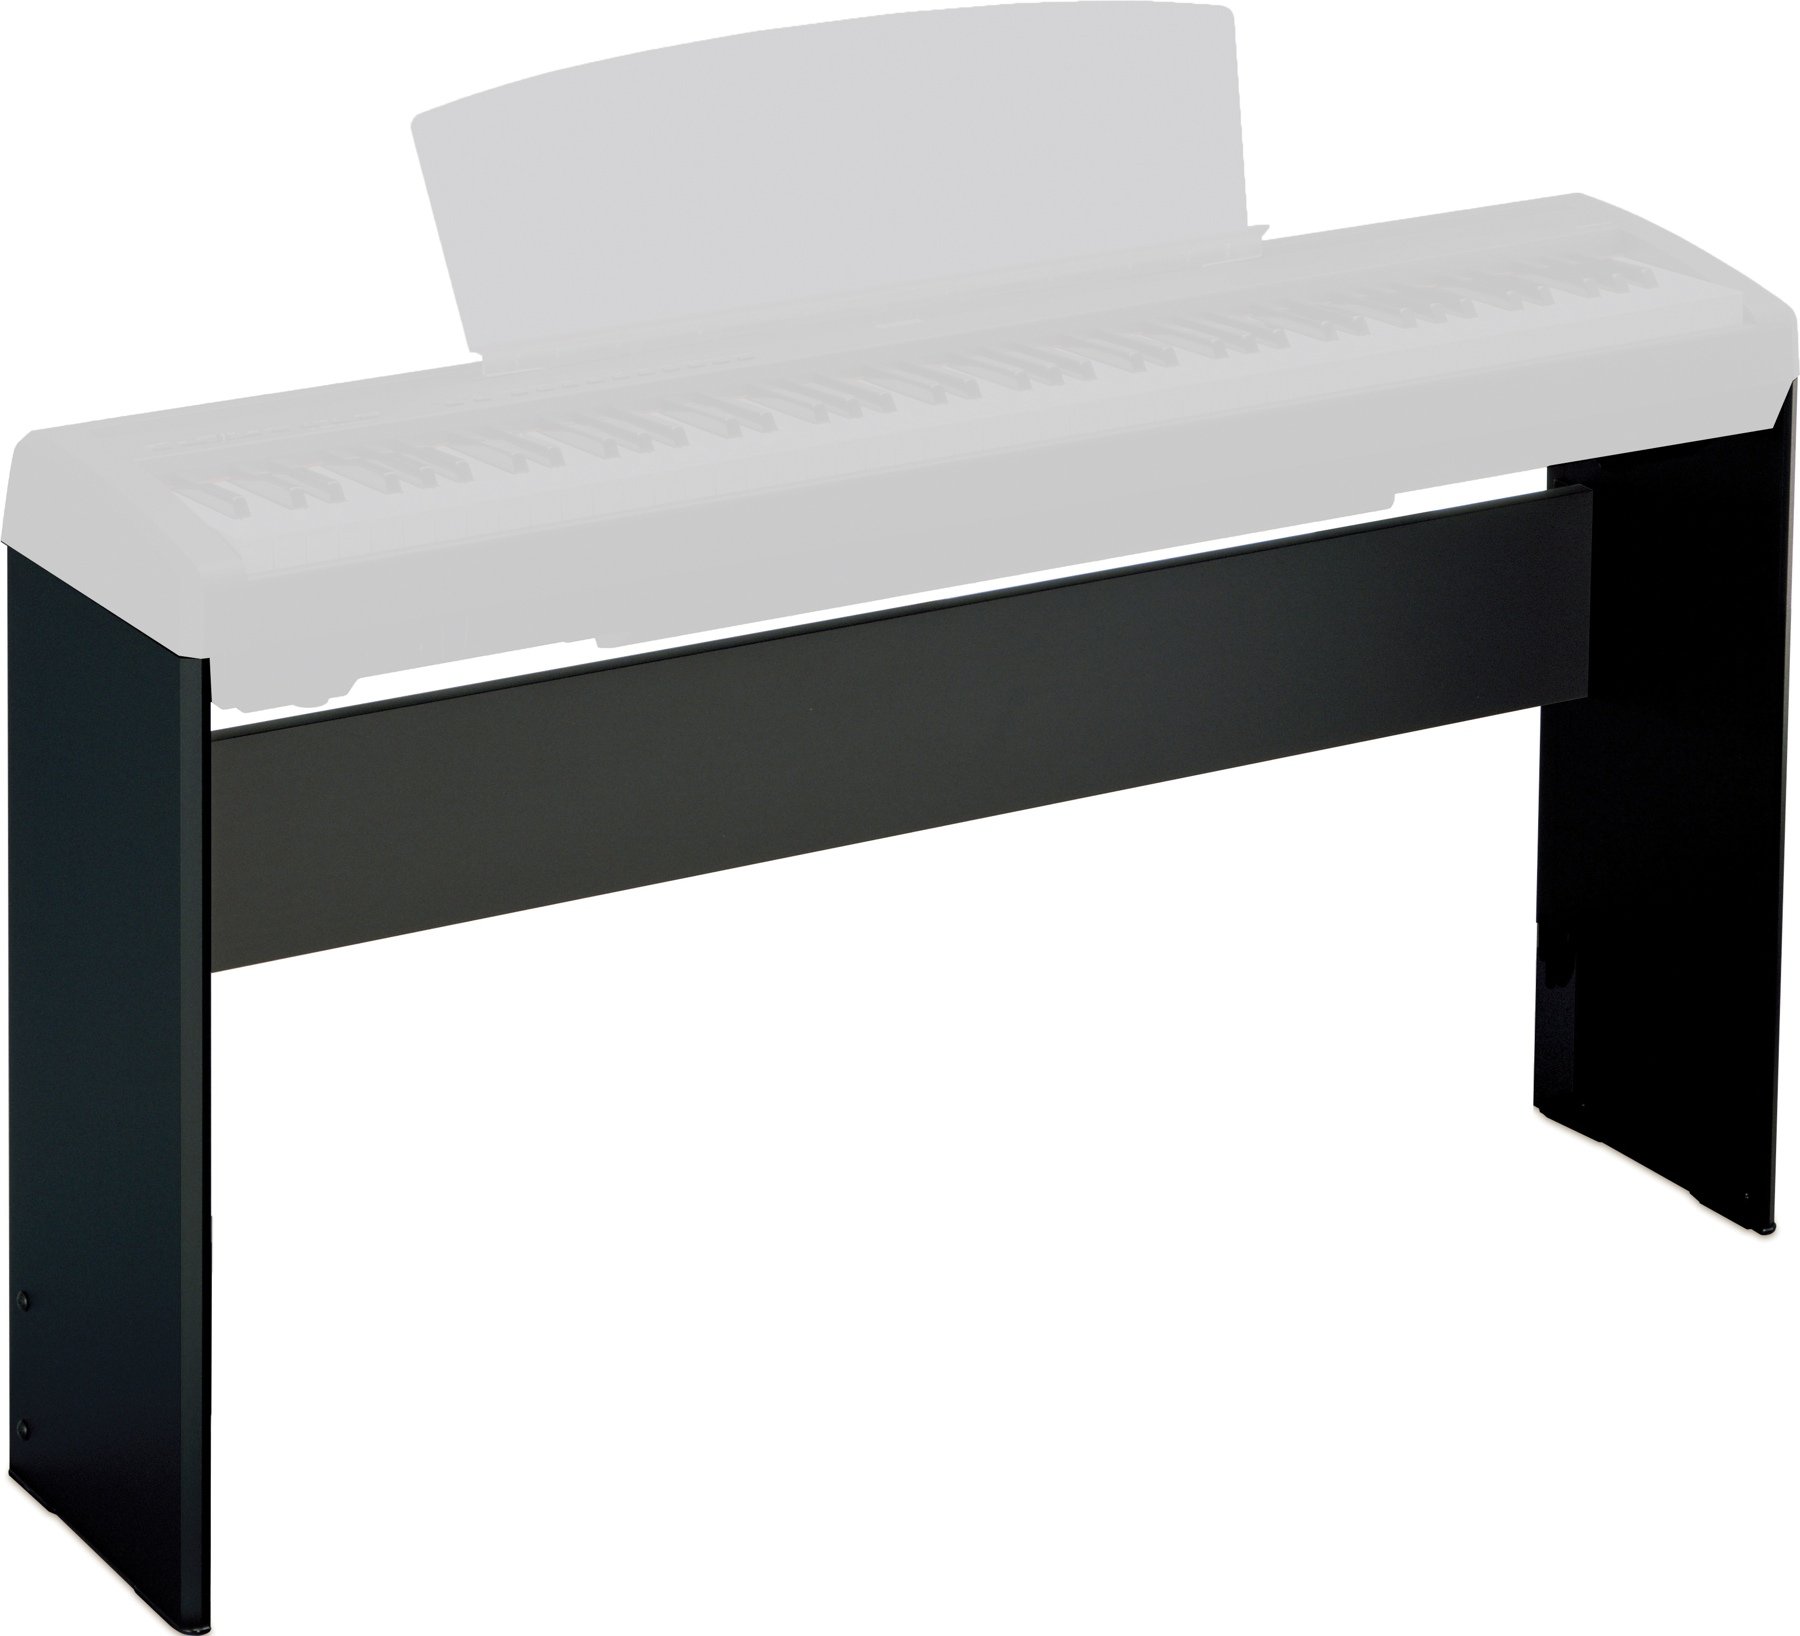 Keyboard Stand in Black - Yamaha L85